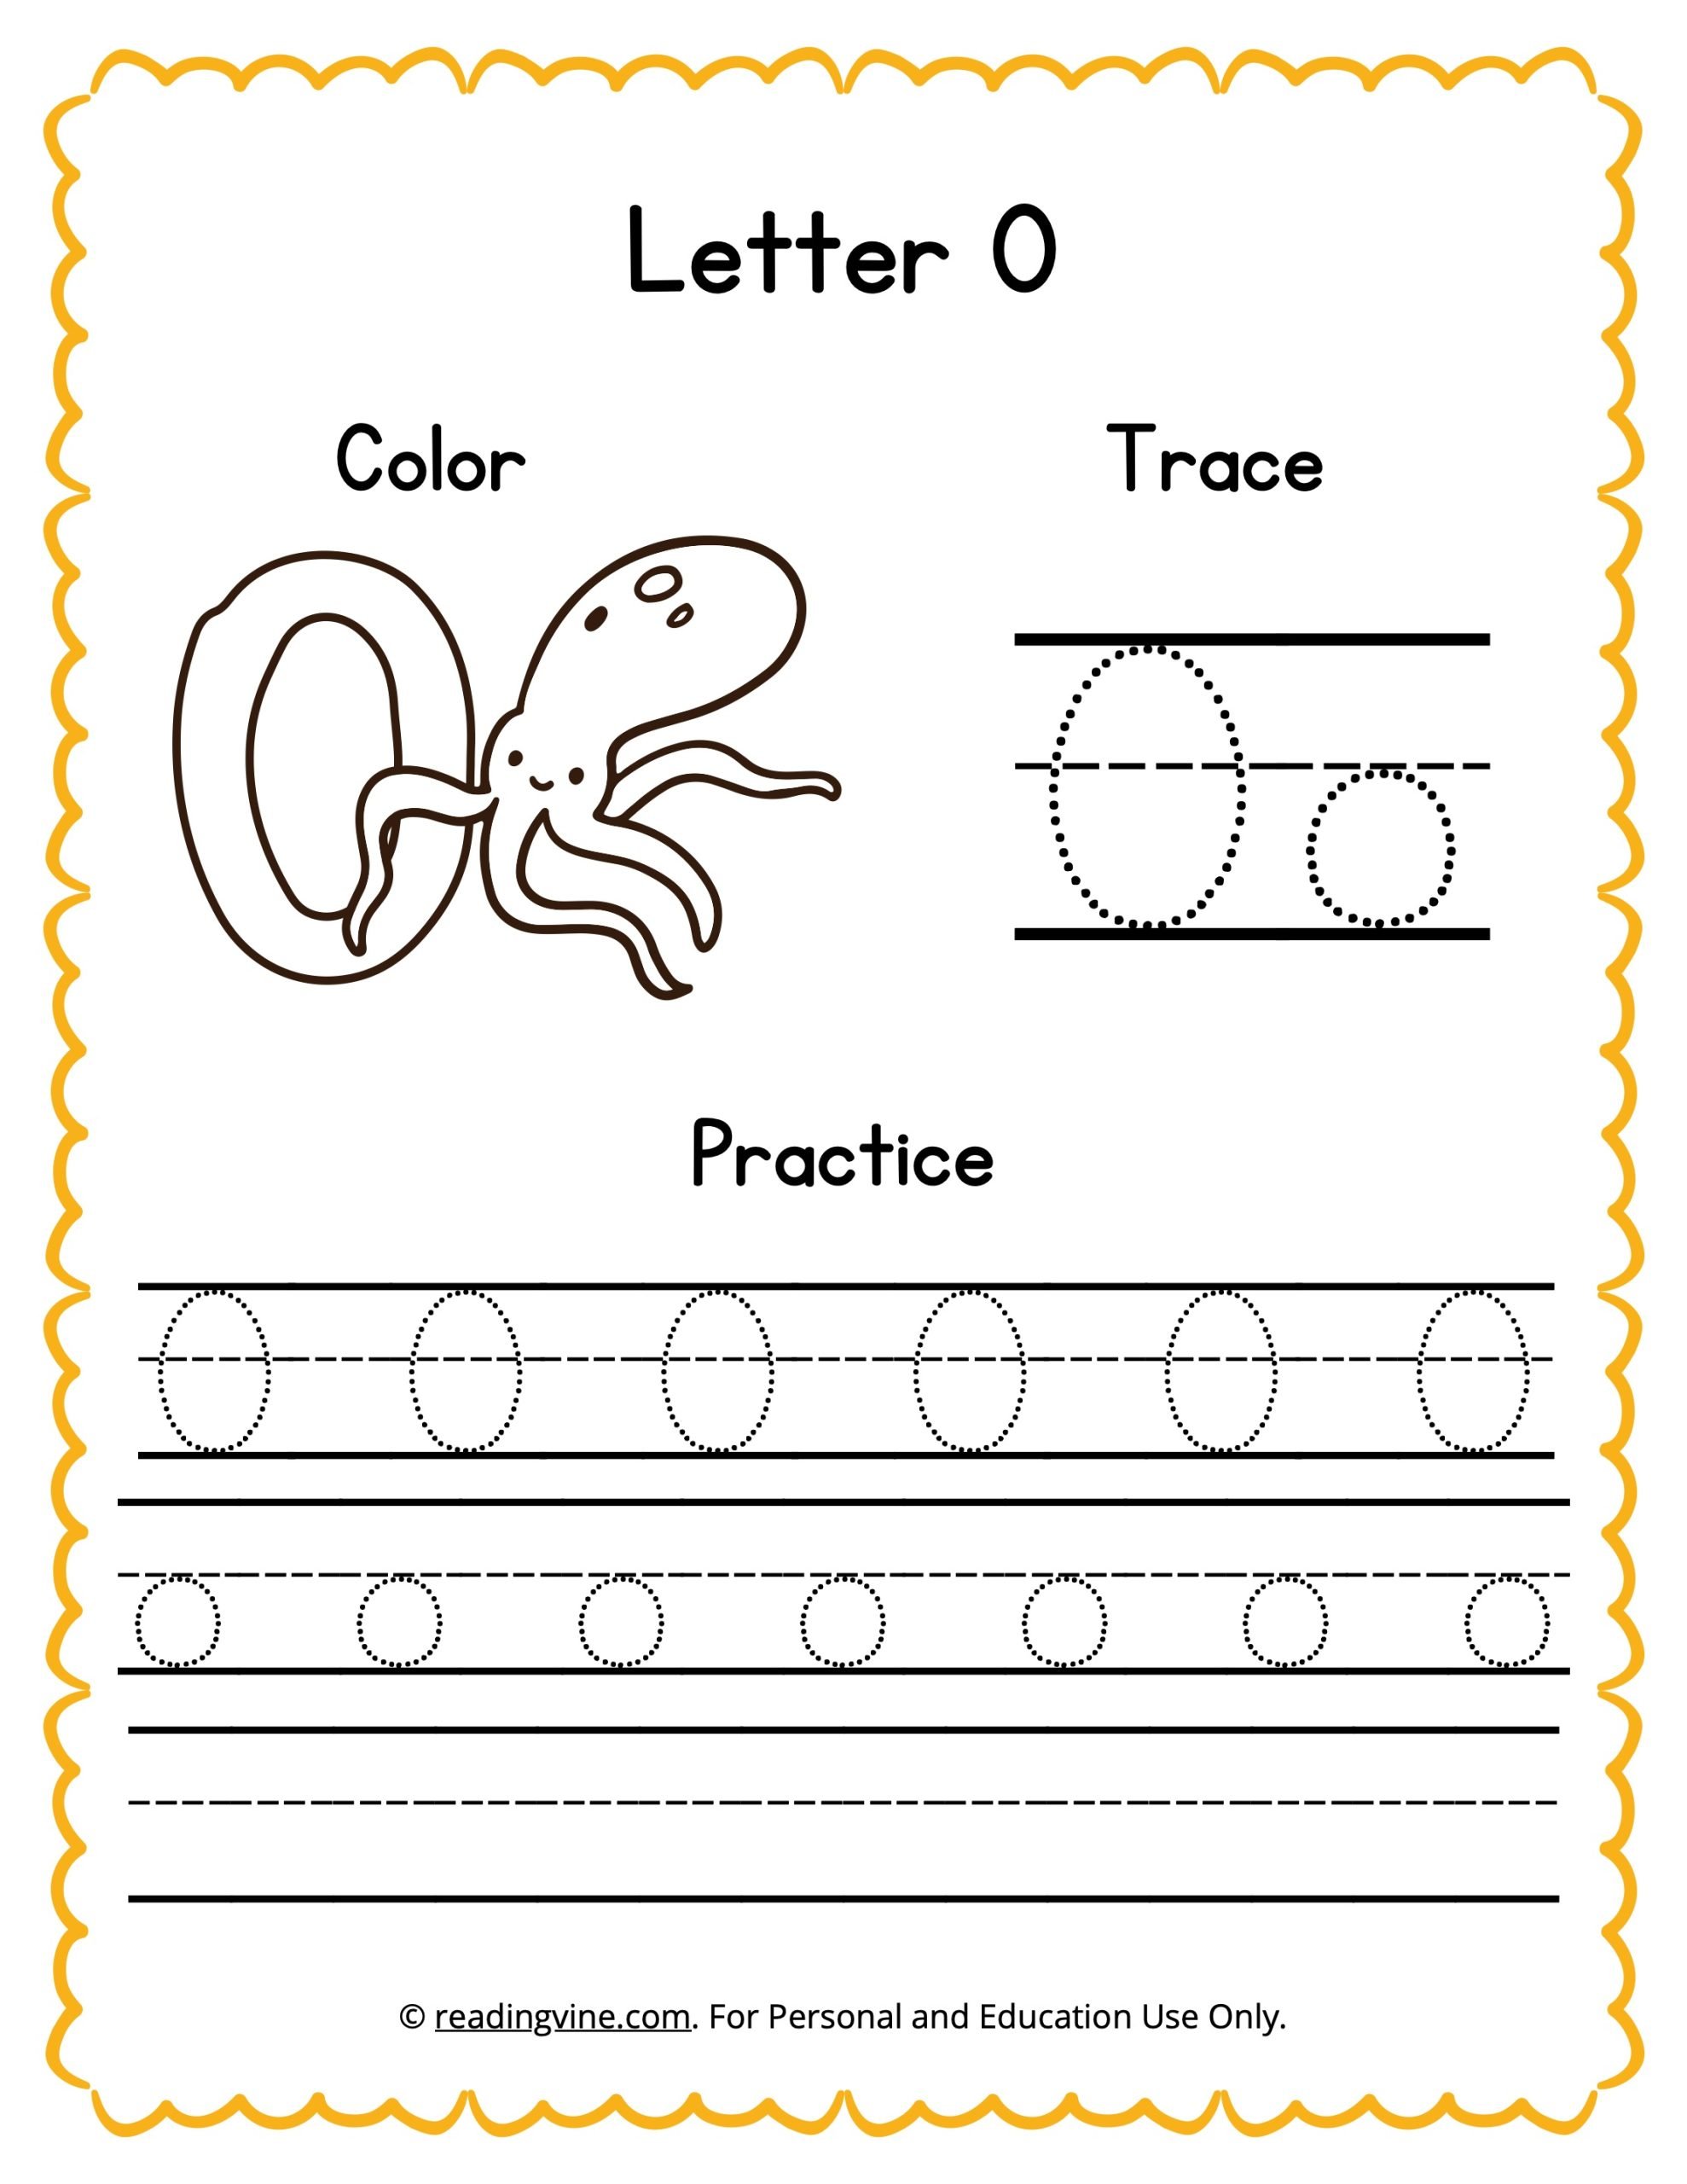 Tracing letter o worksheets for preschool